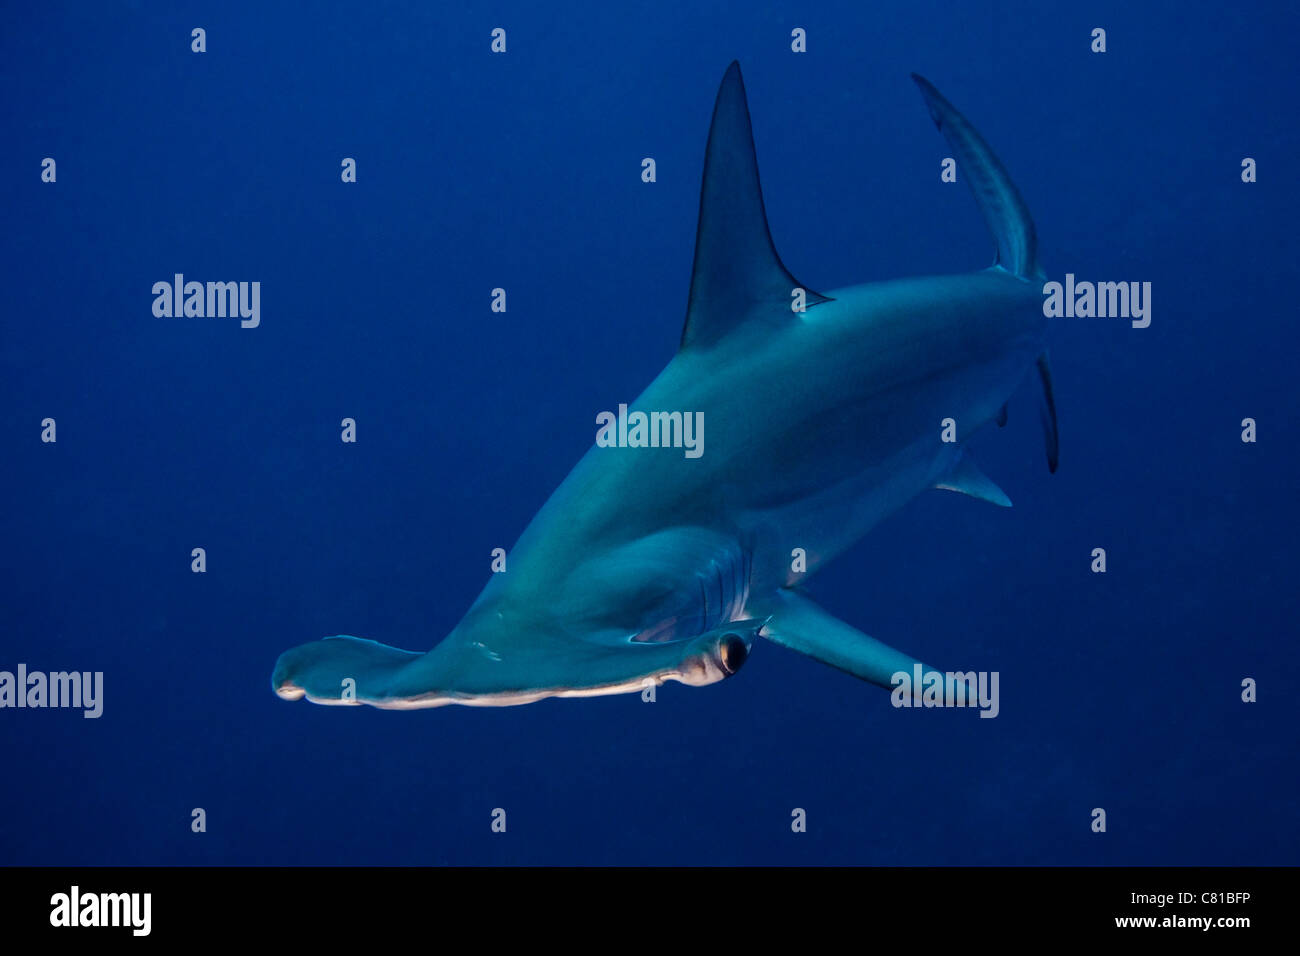 Hammer head shark , Red Sea underwater, Egypt, predator, dangerous, ocean, sea, blue water, deep, ocean, scuba, diving Stock Photo